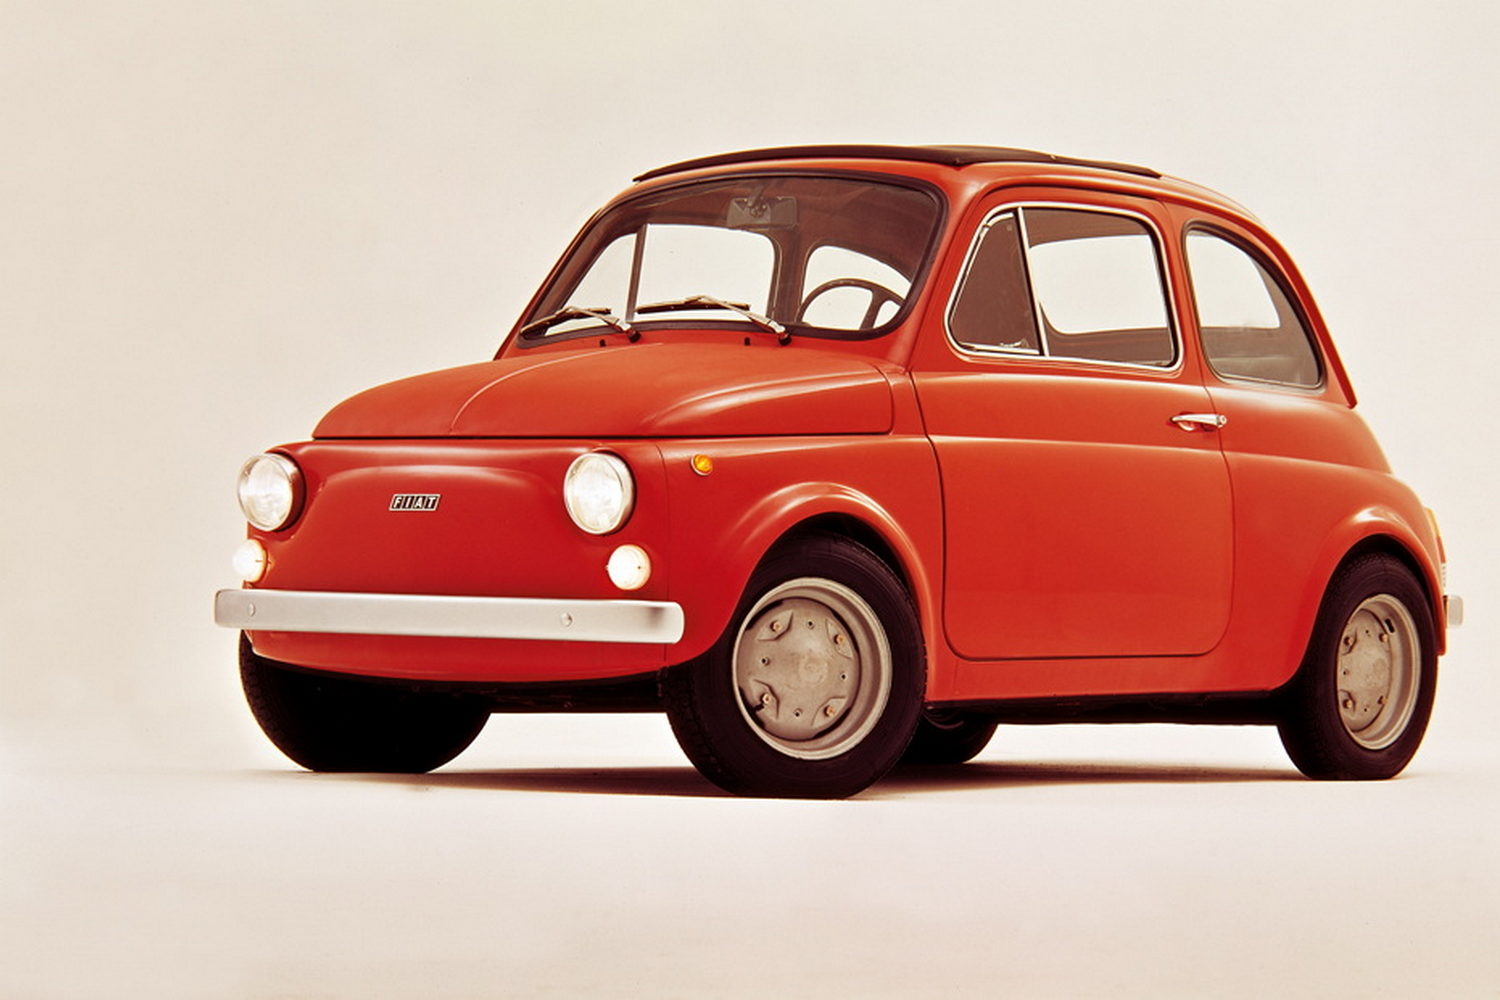 Fiat 500 - the history of Italy's greatest car